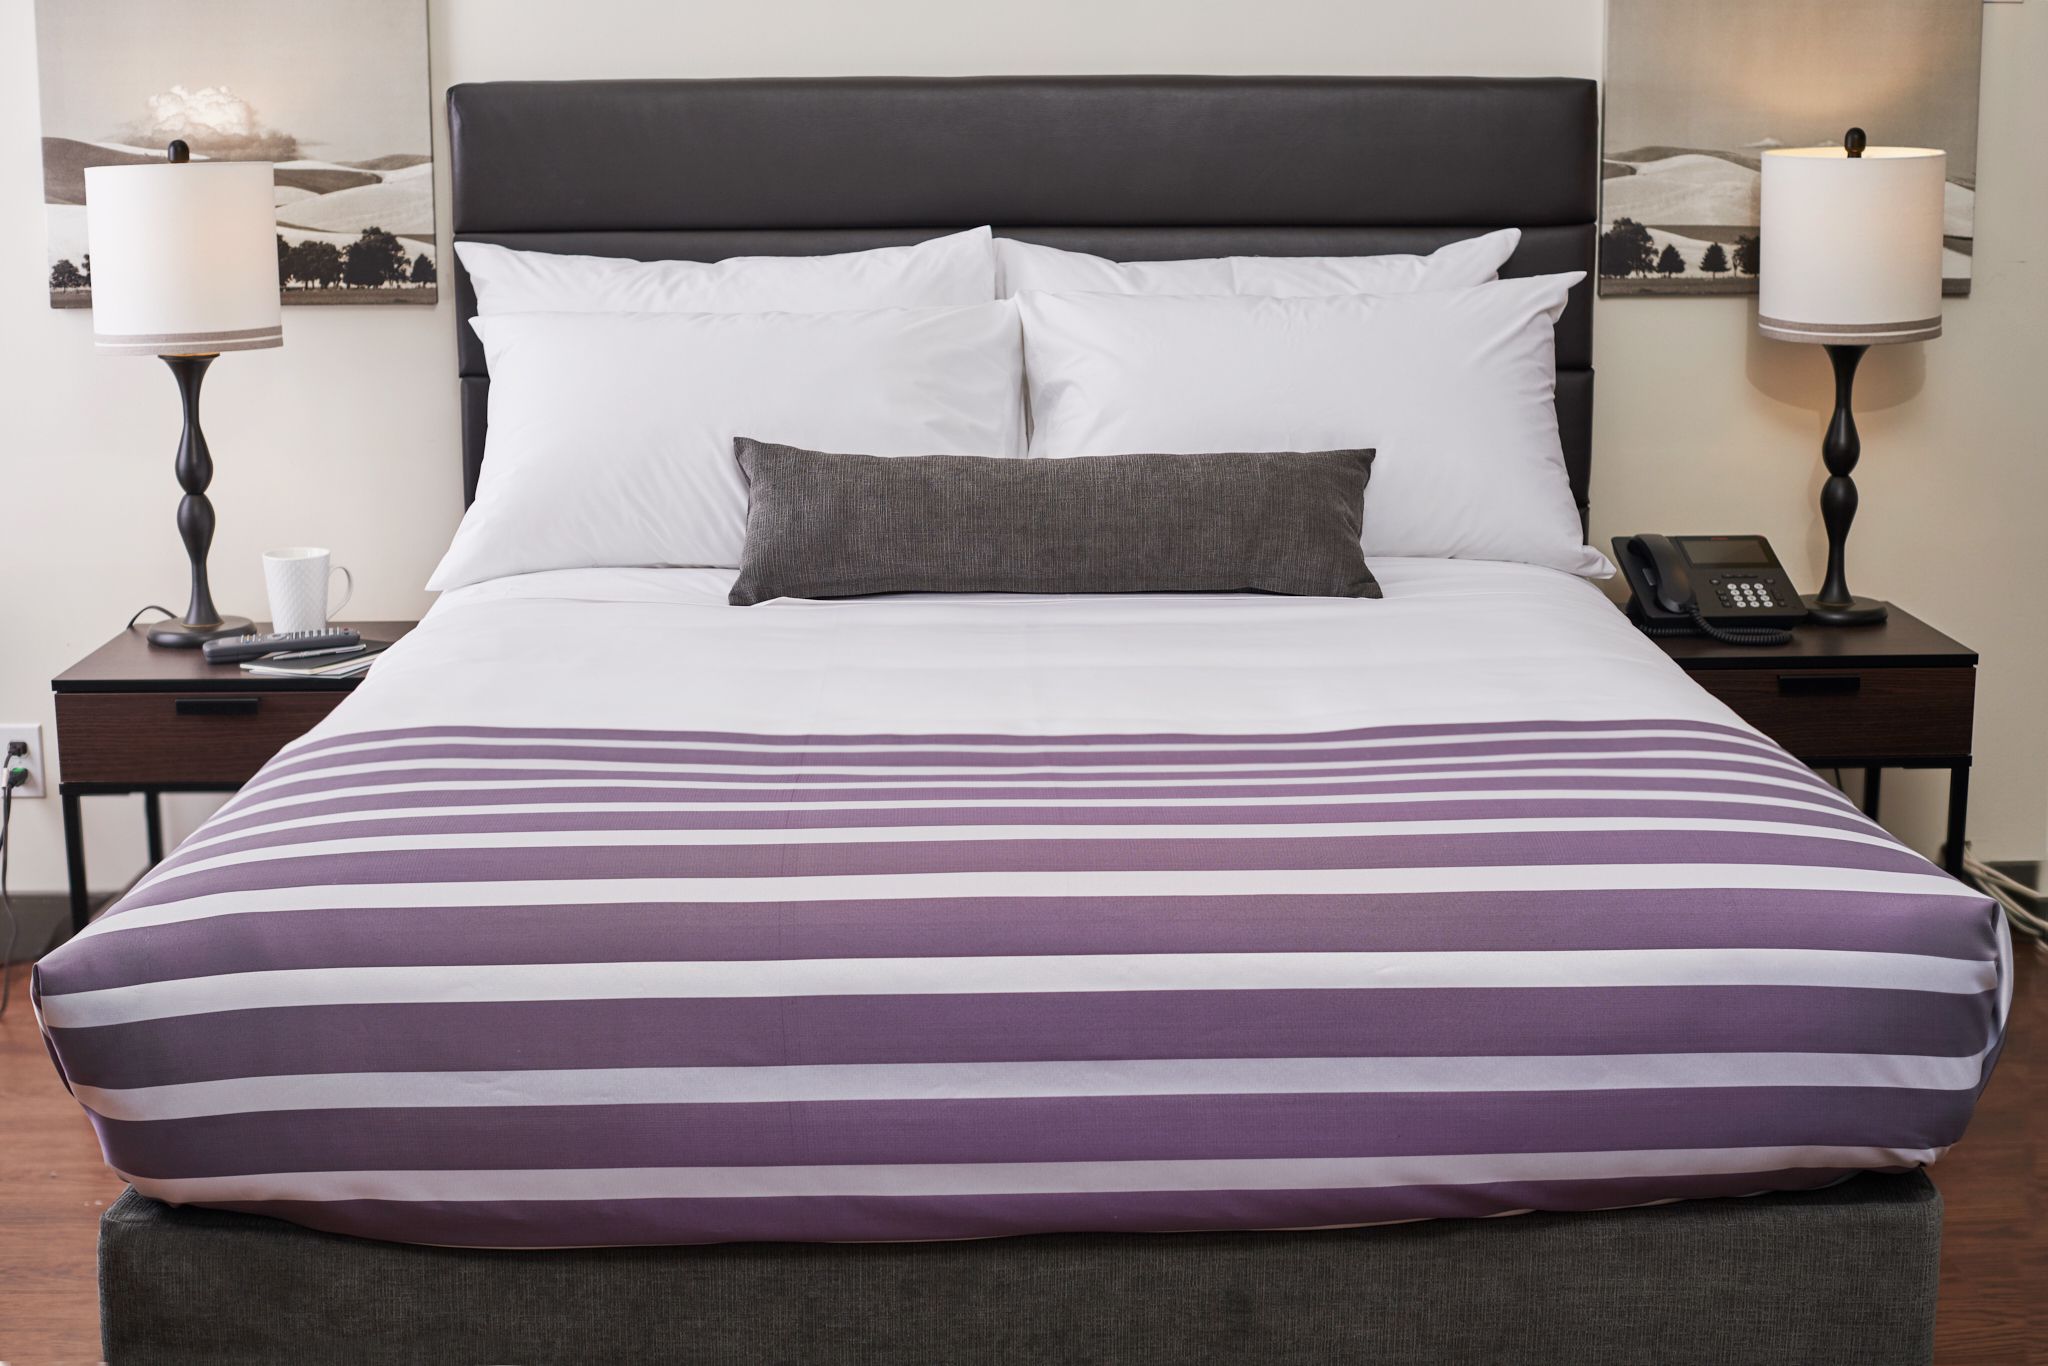 Bed with Vela Uniti Top Sheet Regency Stipe End Cap Placement